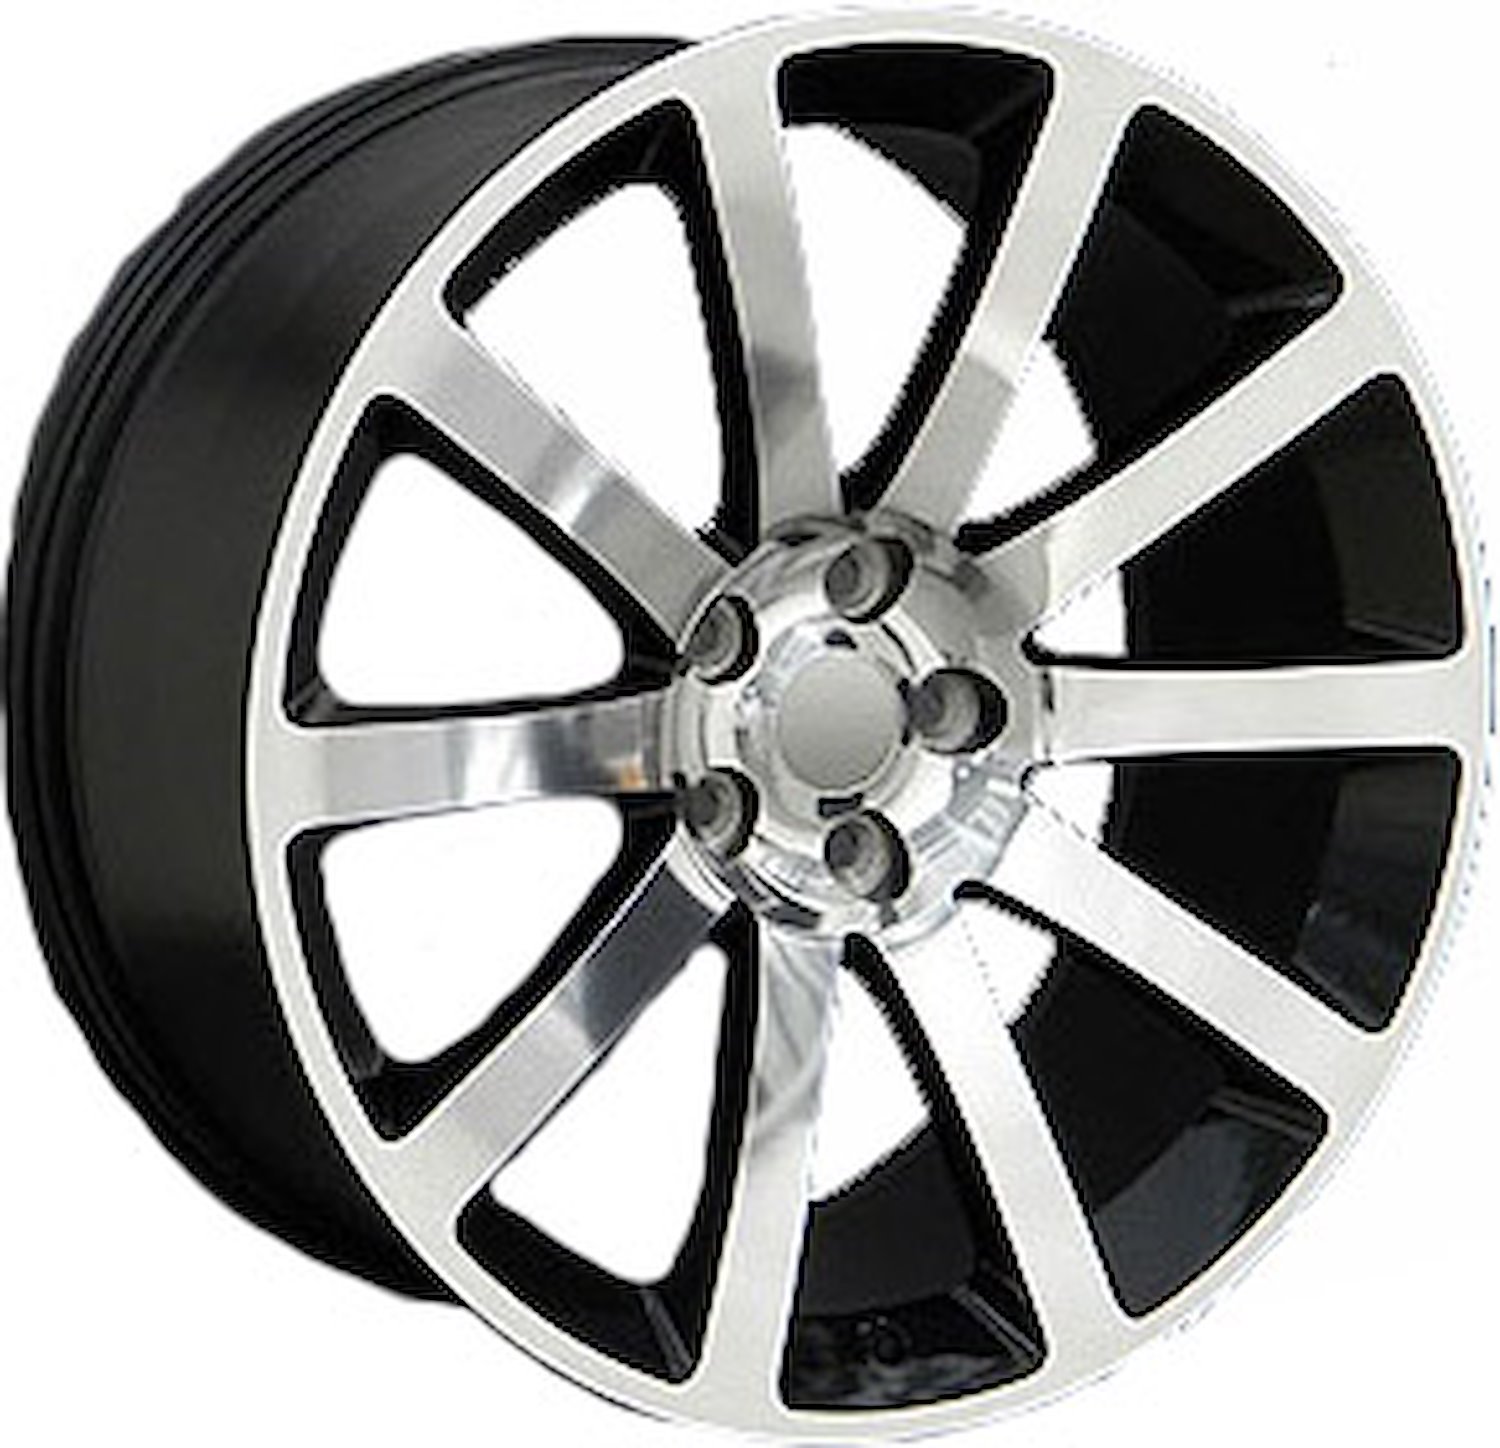 *Chrysler 300 SRT Style Wheel Size: 20" x 9"